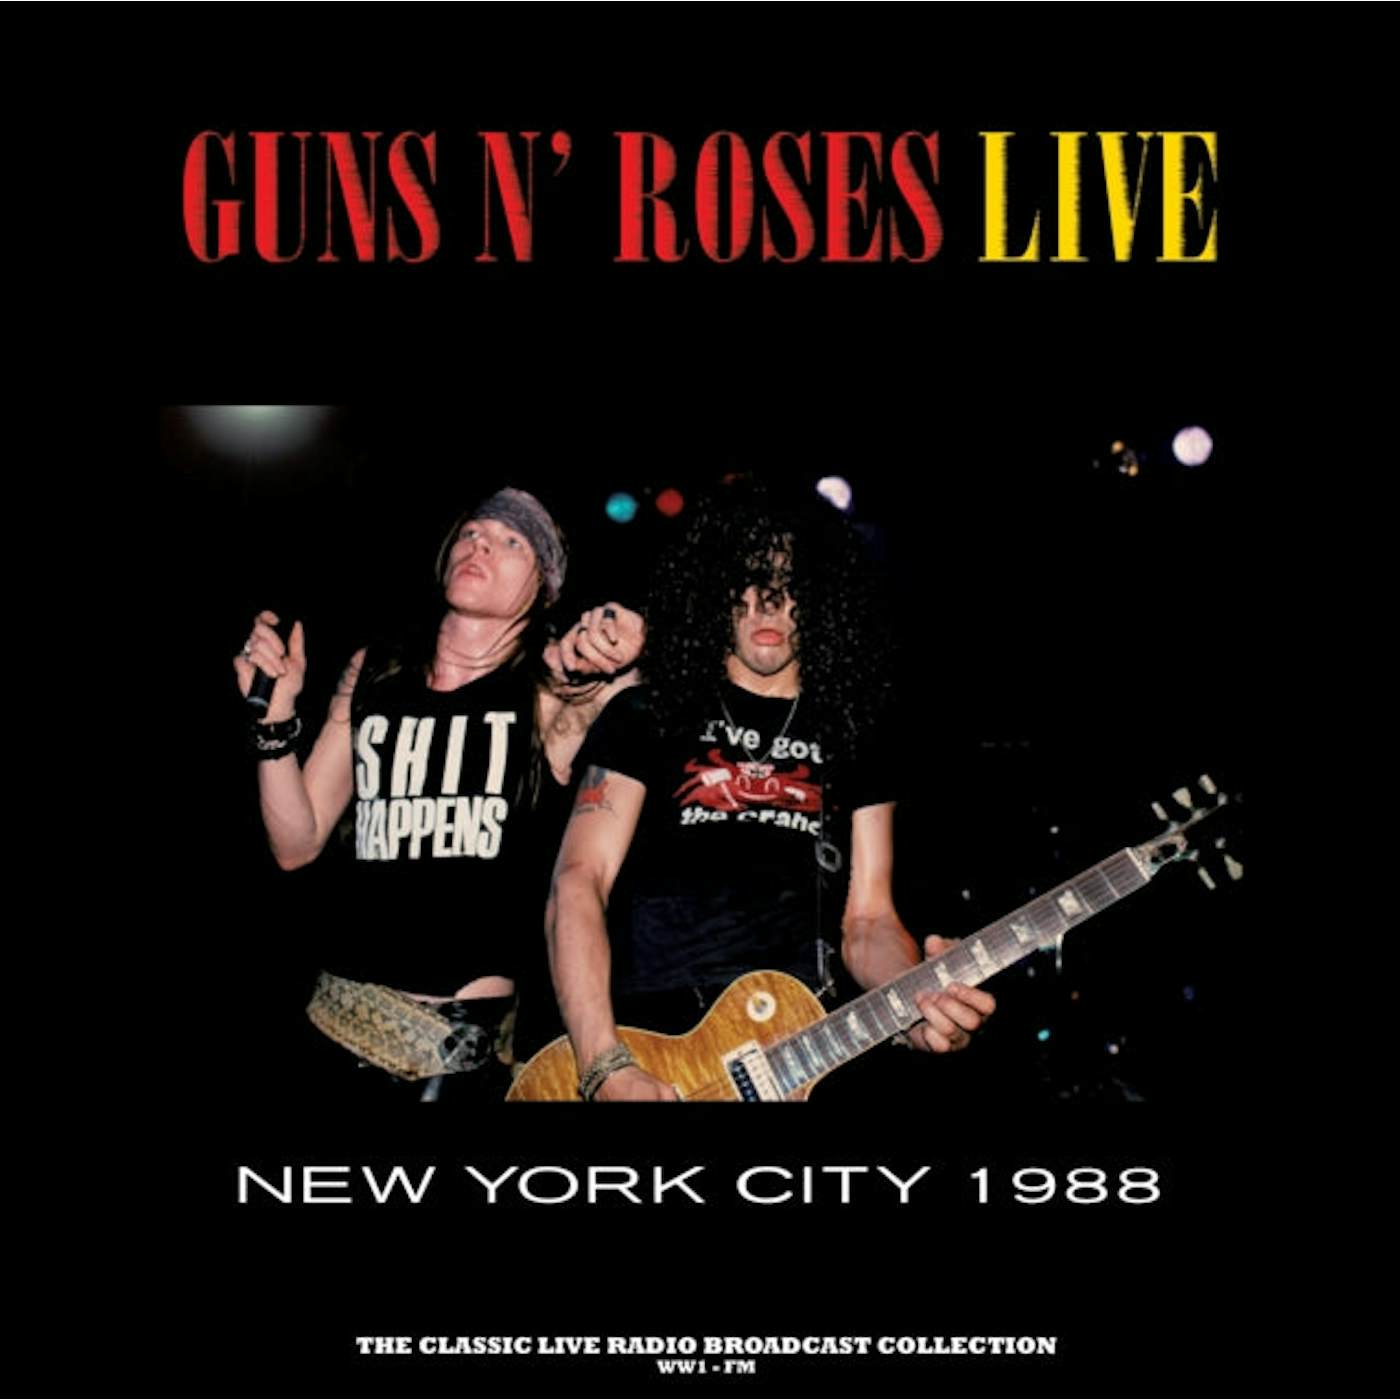 Guns N' Roses LP Vinyl Record - Live In New York City 19 88 (Yellow Vinyl)